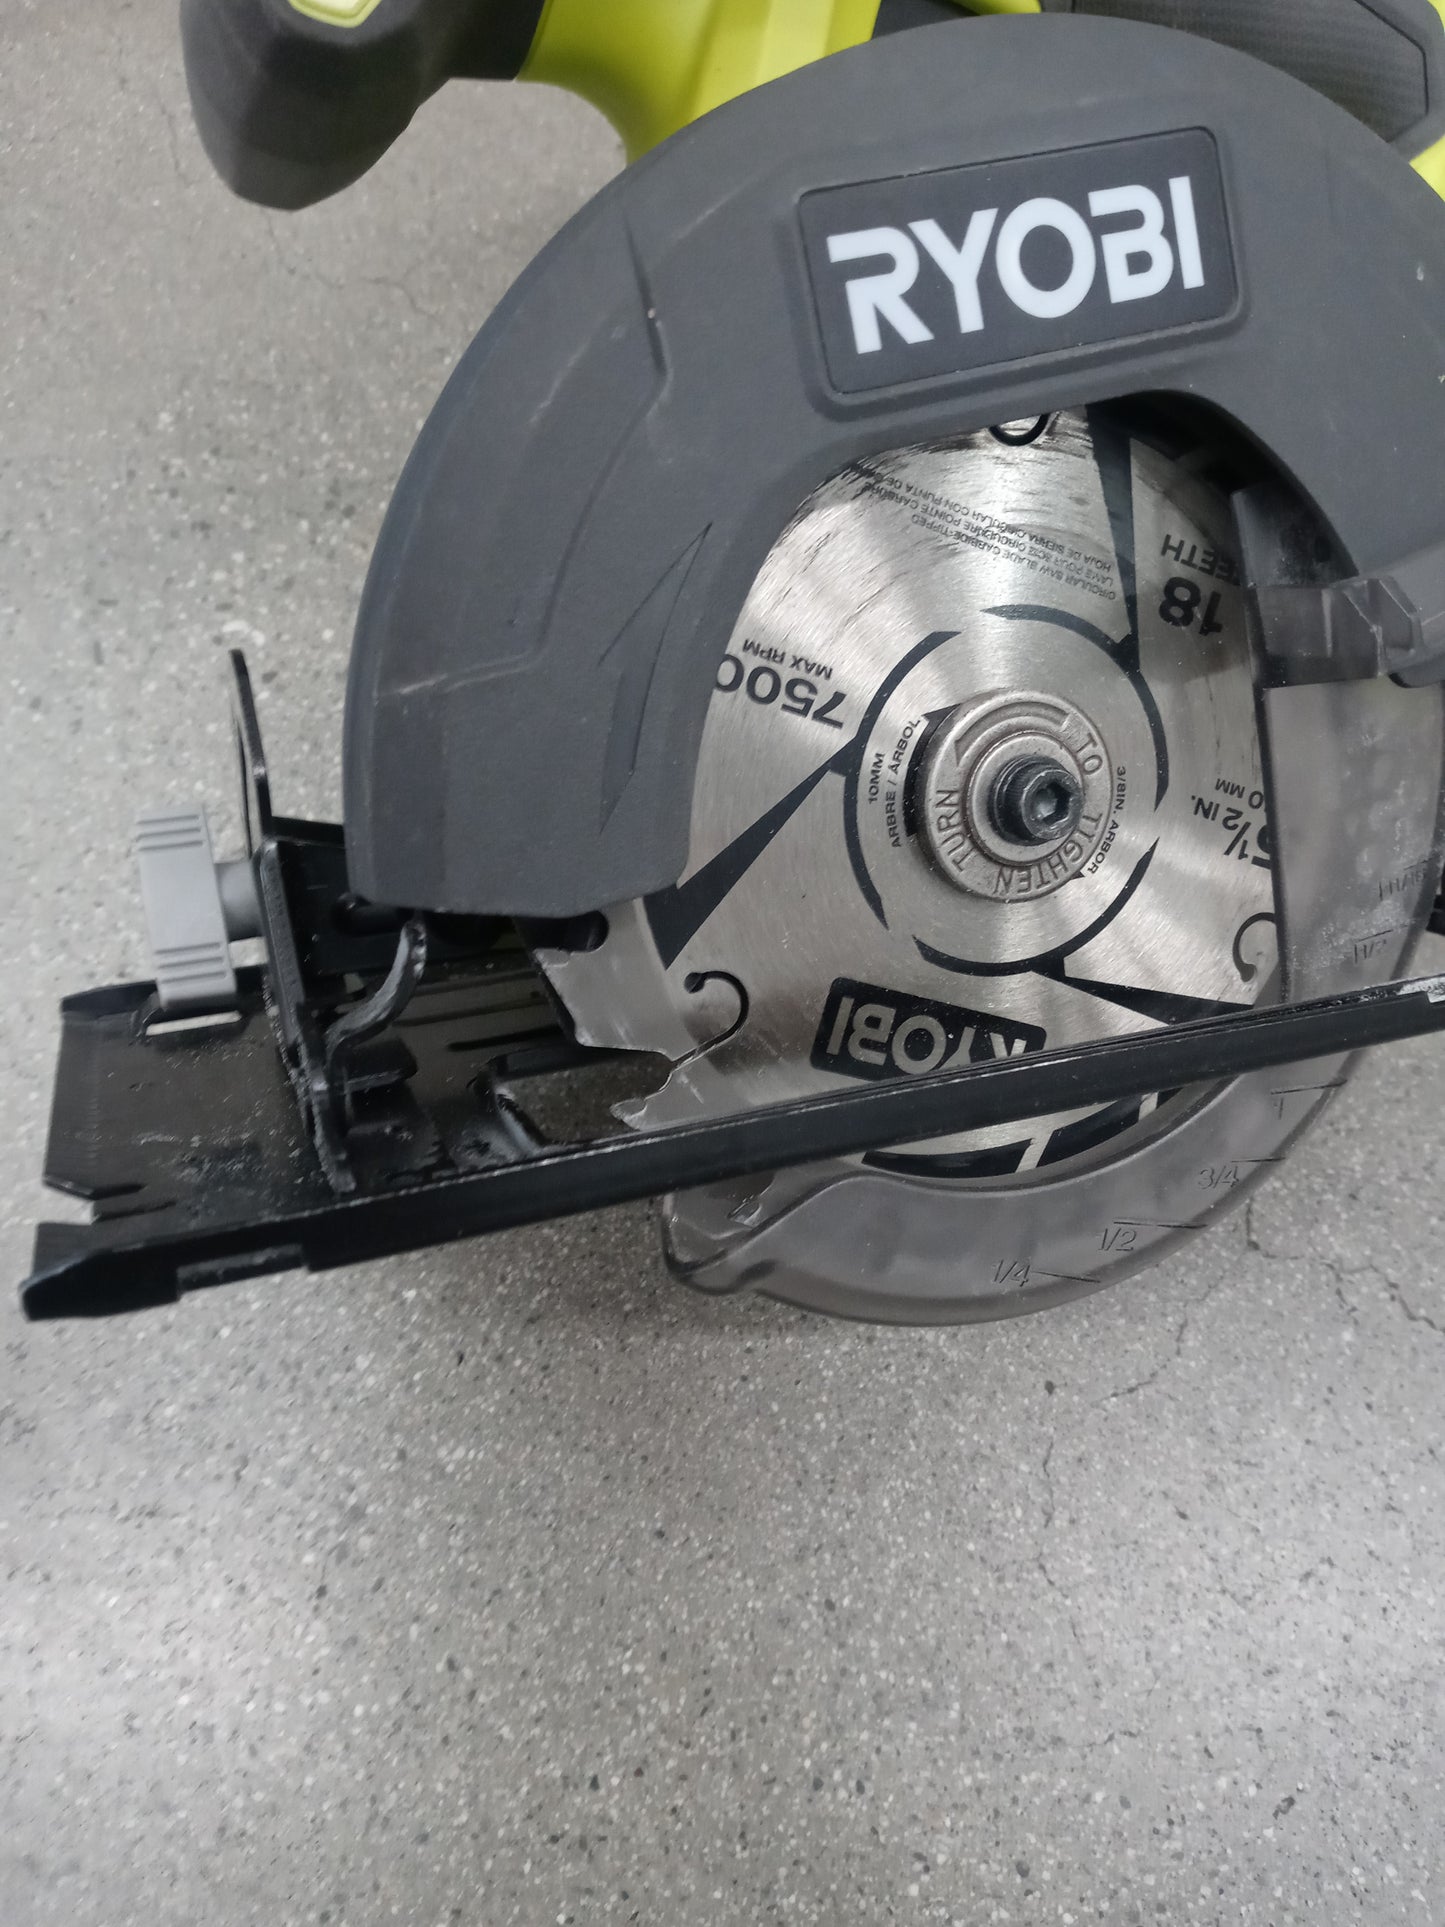 Ryobi One + 18V Cordless 5 1/2 in. Circular Saw